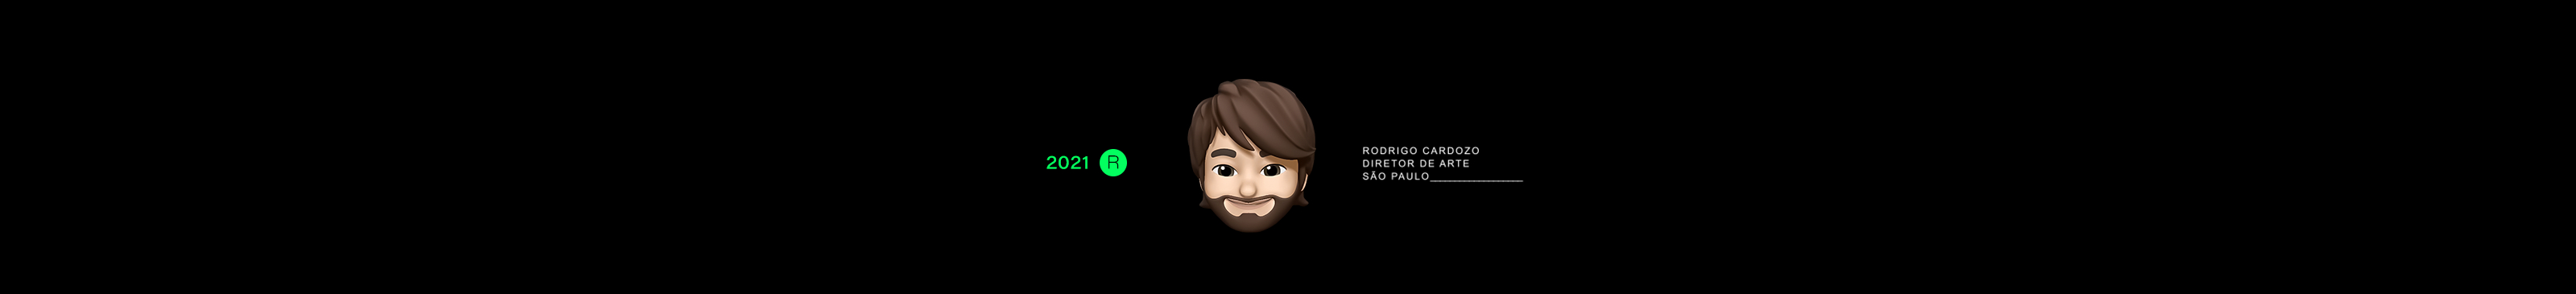 Bannière de profil de Rodrigo Cardozo